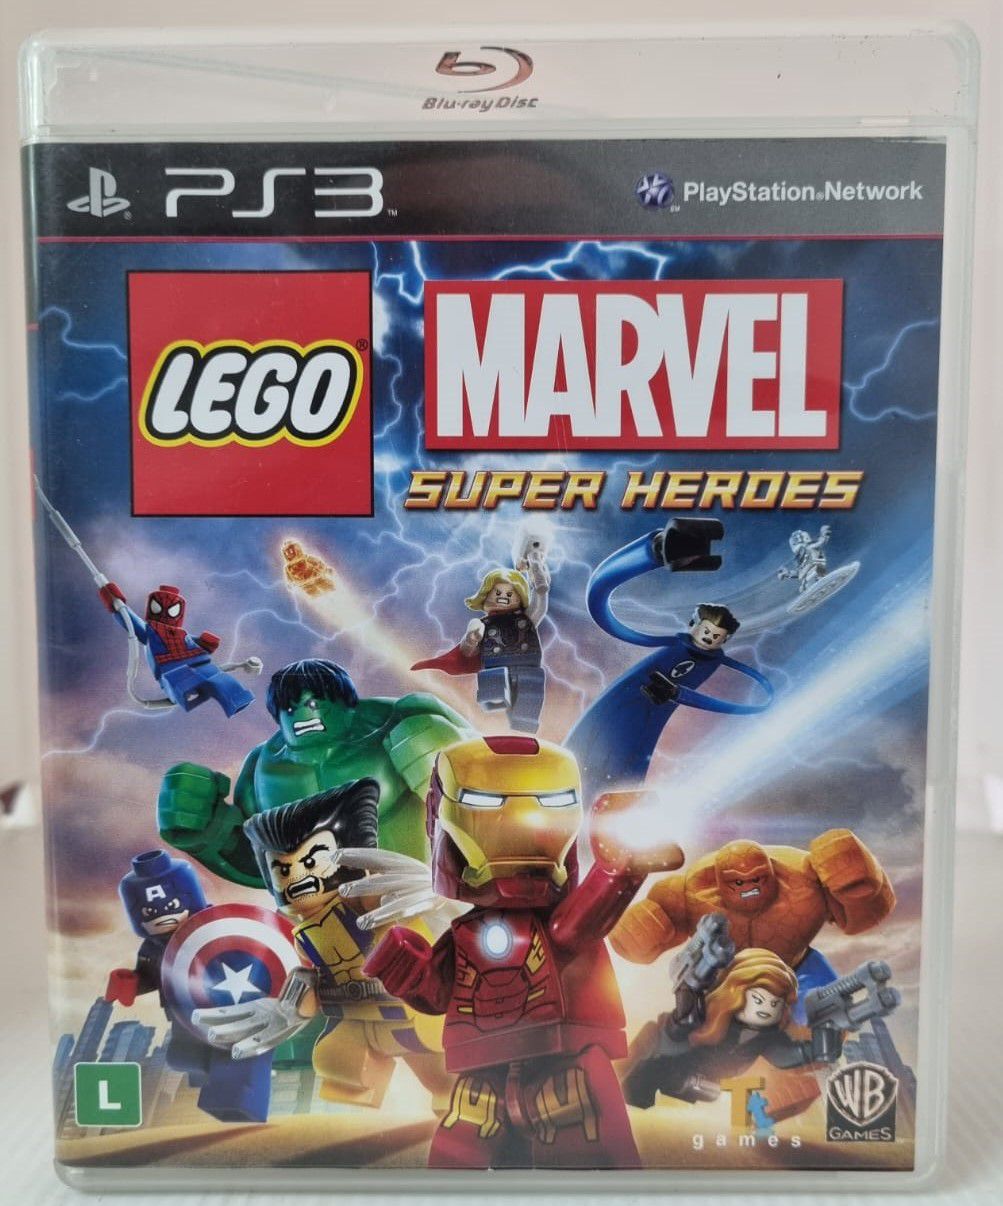 Jogo Ps4 Lego Marvel Super Heroes 2 Br Midia Fisica